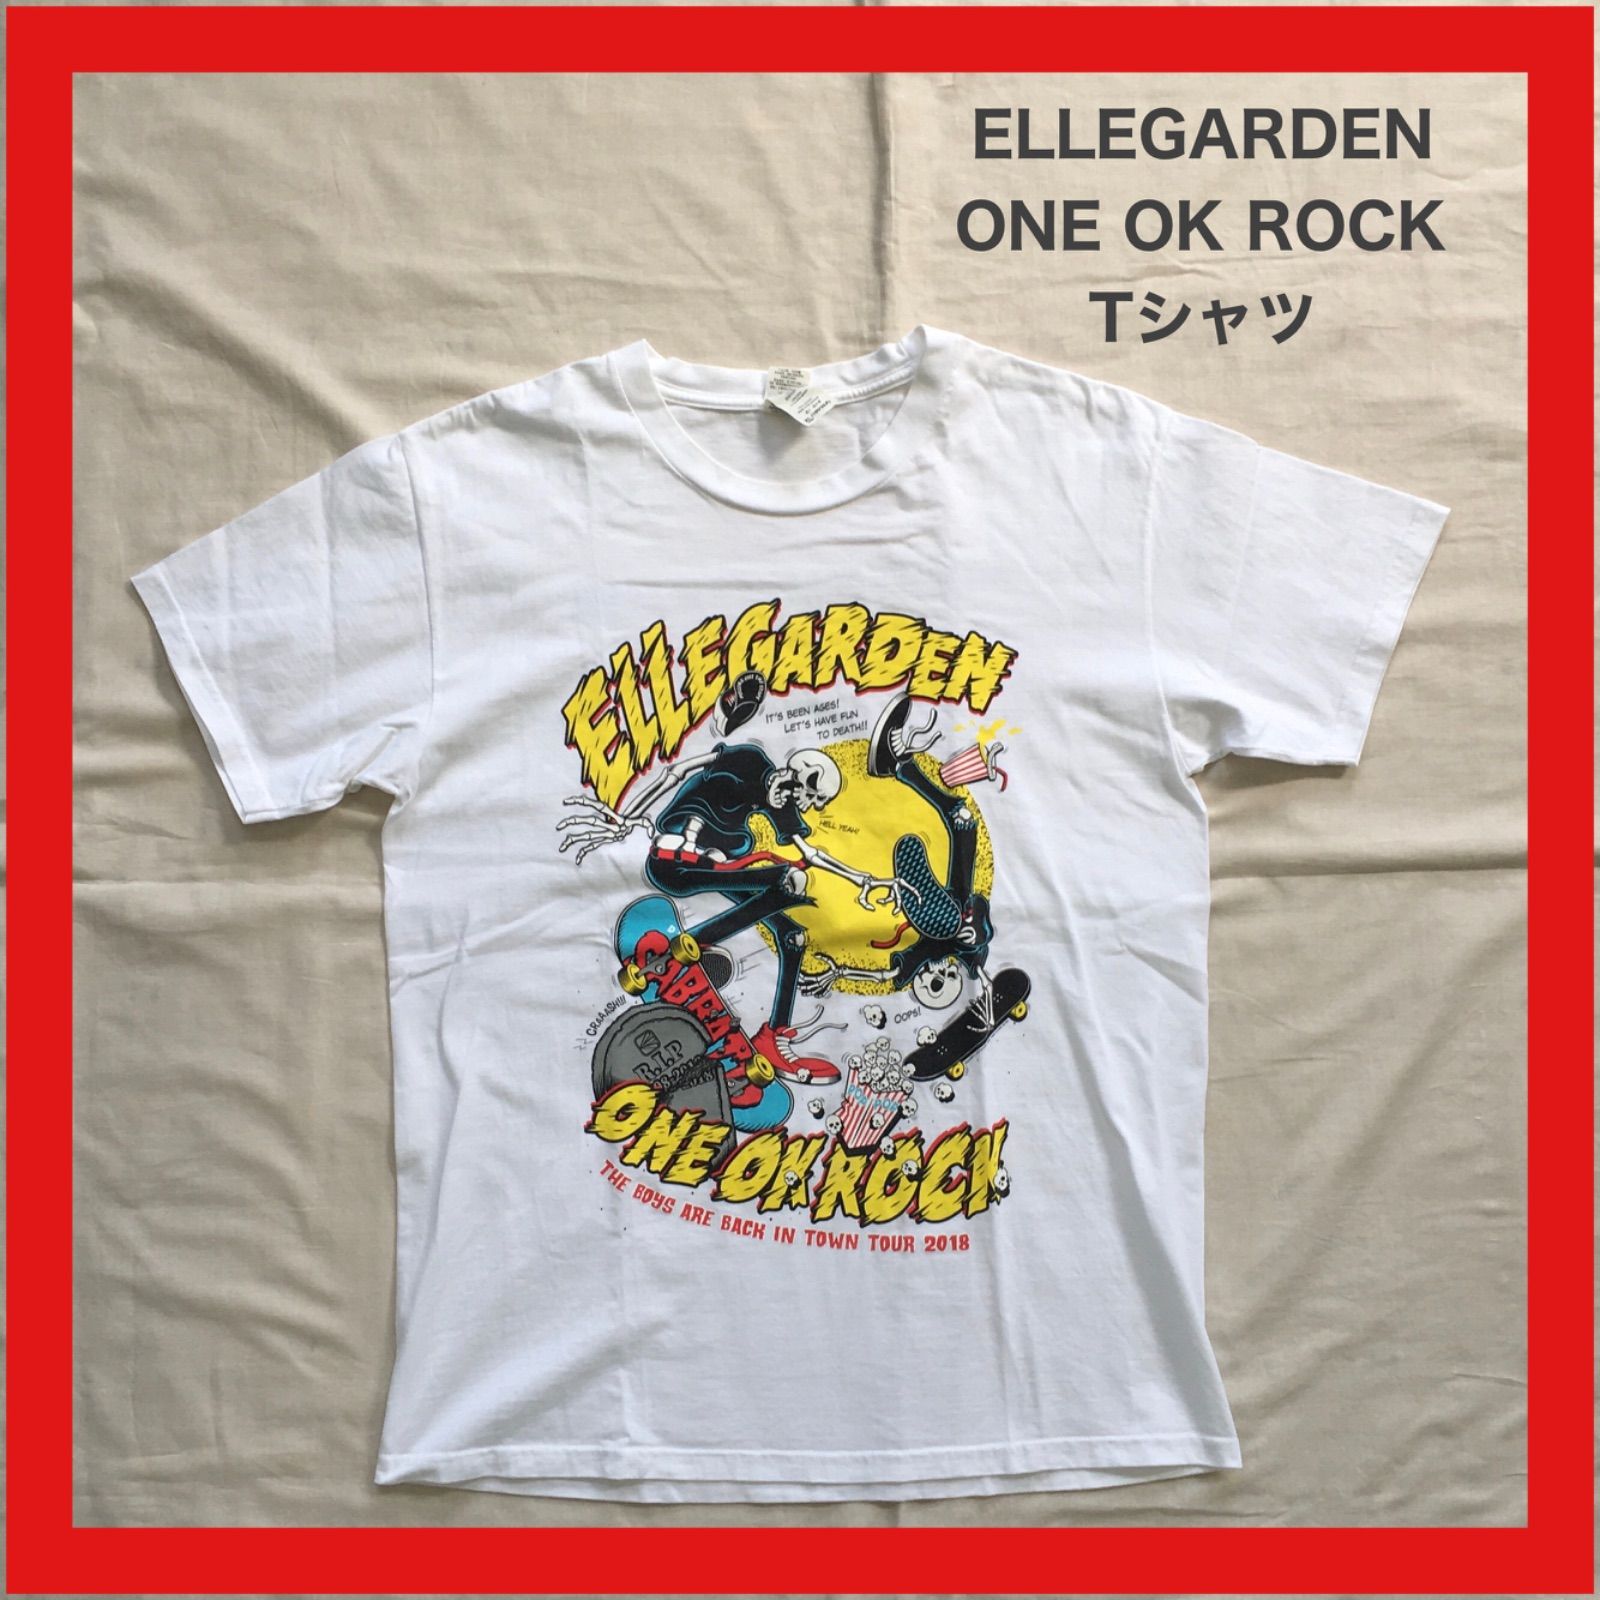 ELLEGARDEN ONEOKROCK エルレガーデン ワンオクロック Tシャツ 2018 XL